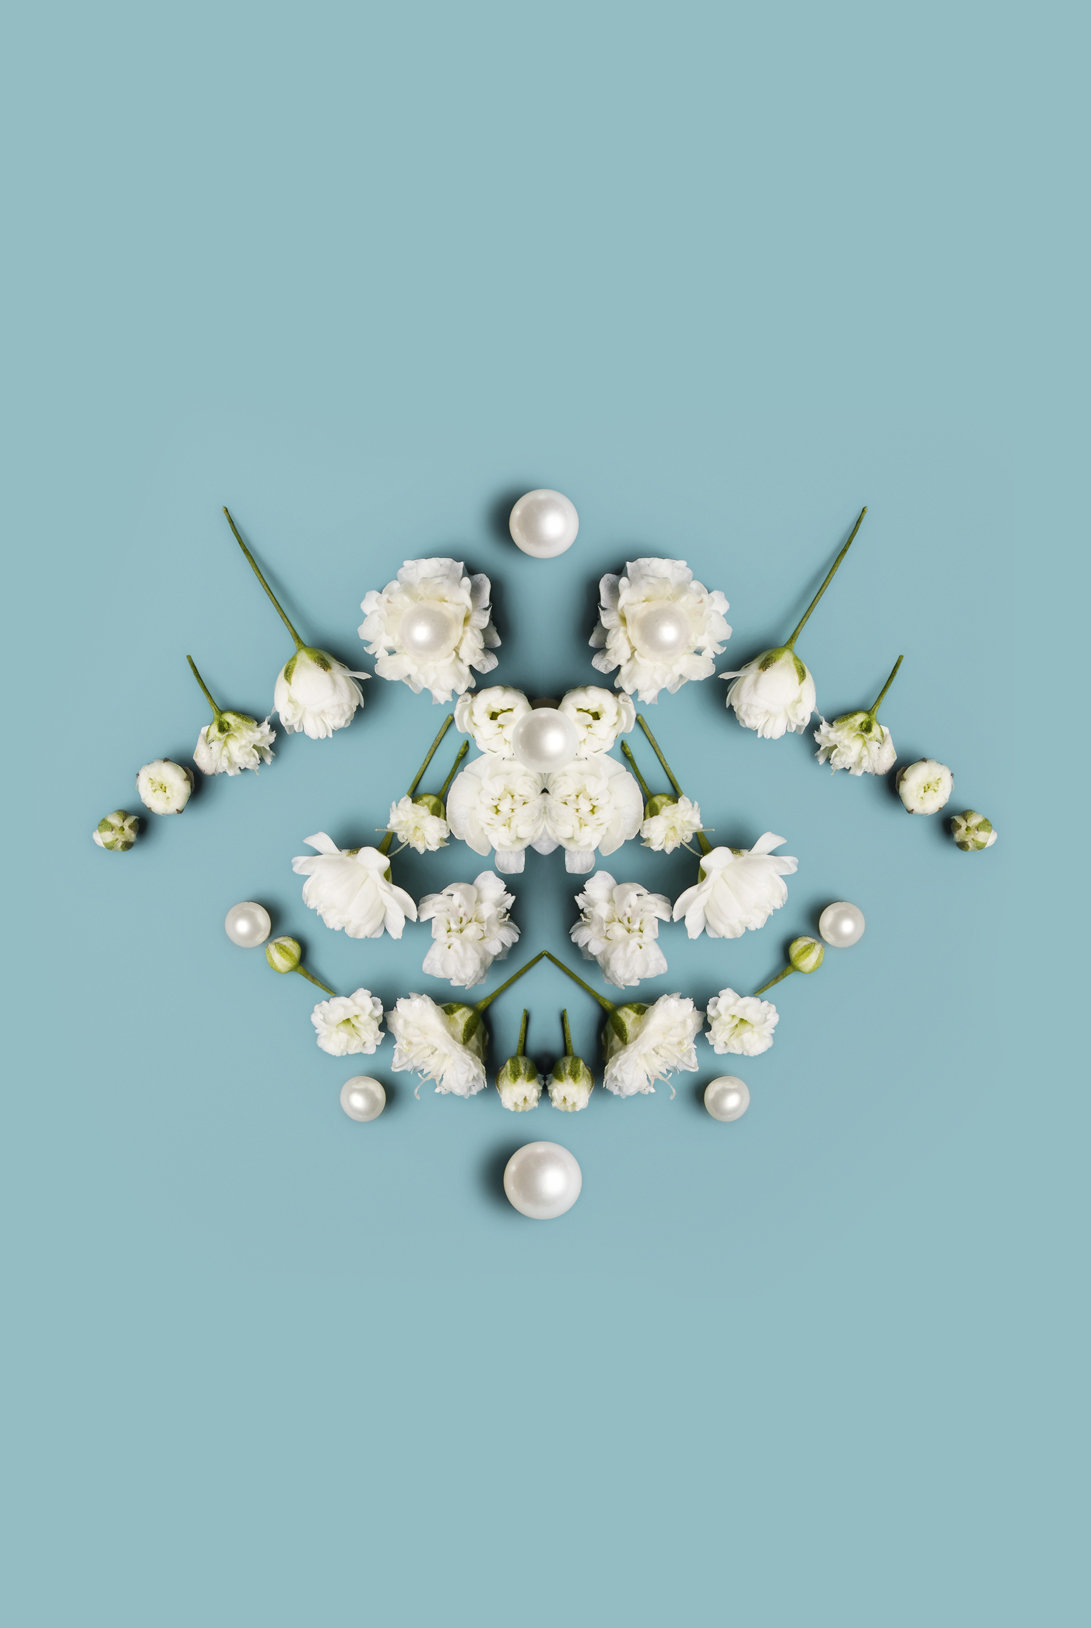 CARLA COSTE / Art Director & Image Maker Givenchy – Les Saisons